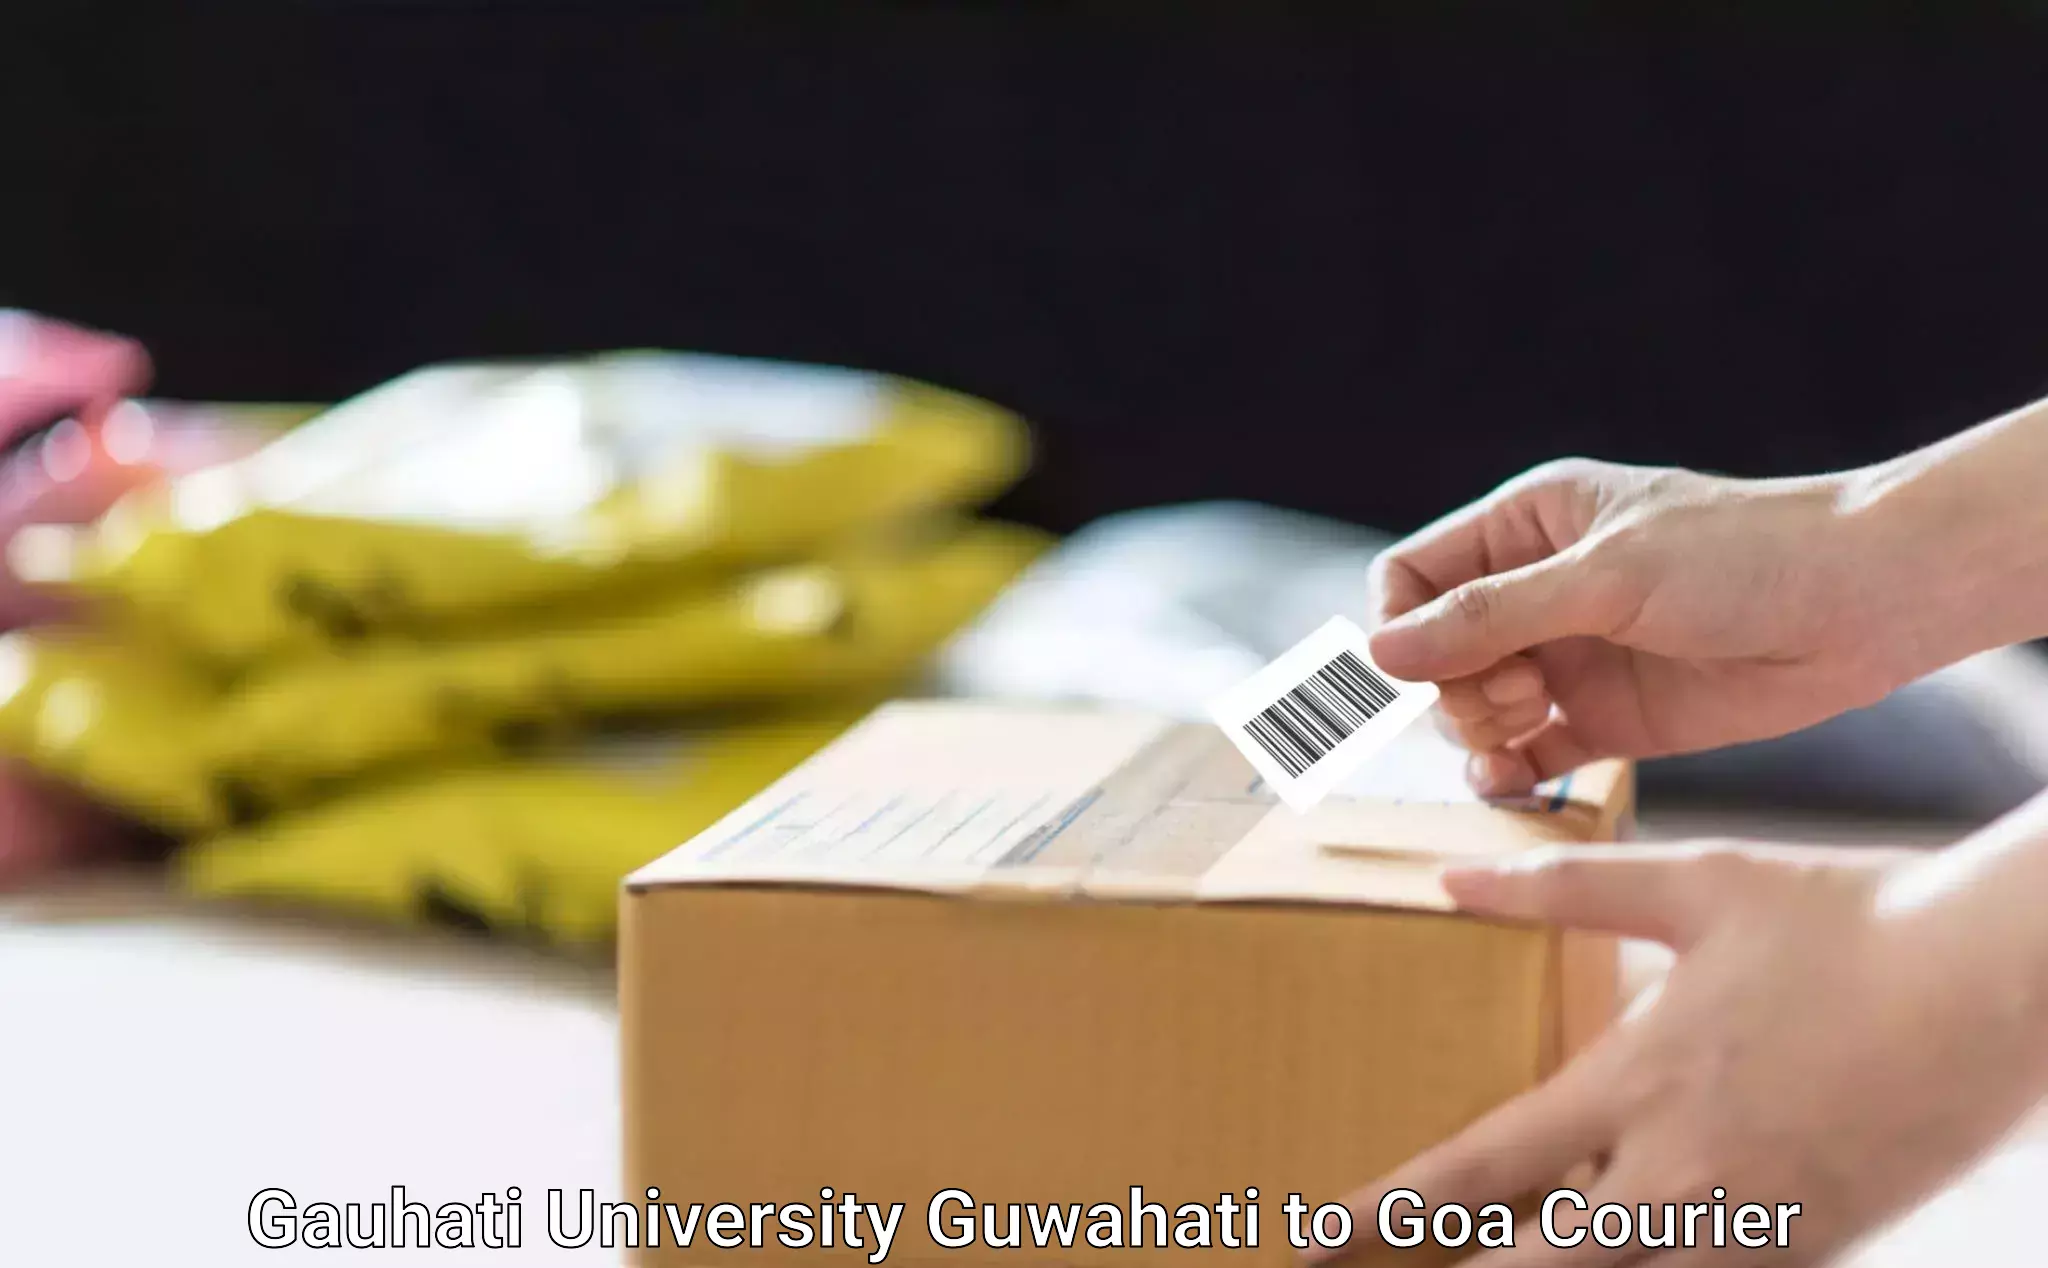 Weekend courier service Gauhati University Guwahati to South Goa